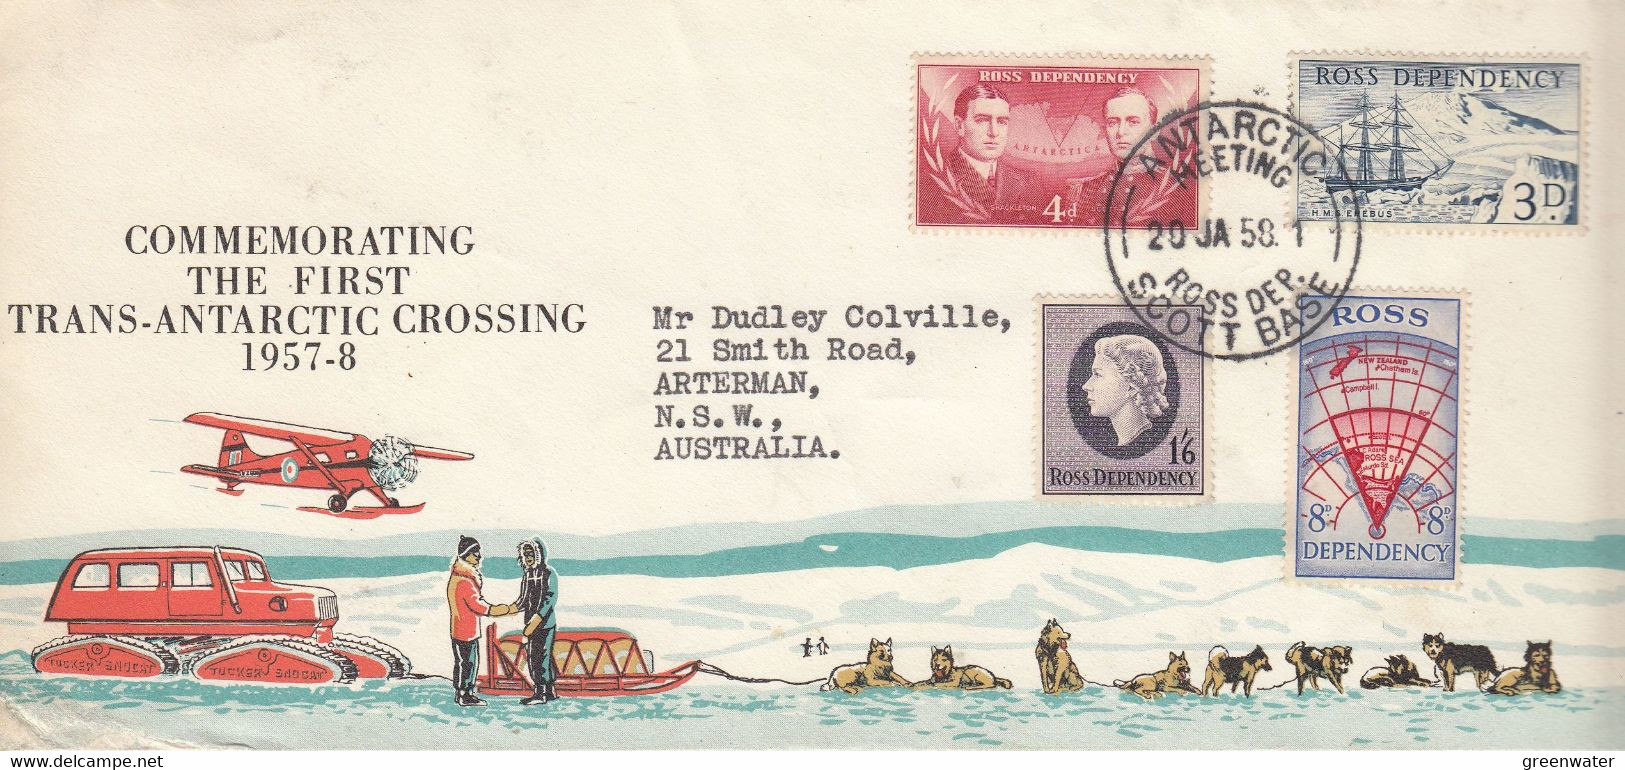 Ross Dependency 1958 Commemorating 1st Trans-Antarctic Crossing Cover Ca Scott Base 20 JA 58 (ROF170) - Lettres & Documents